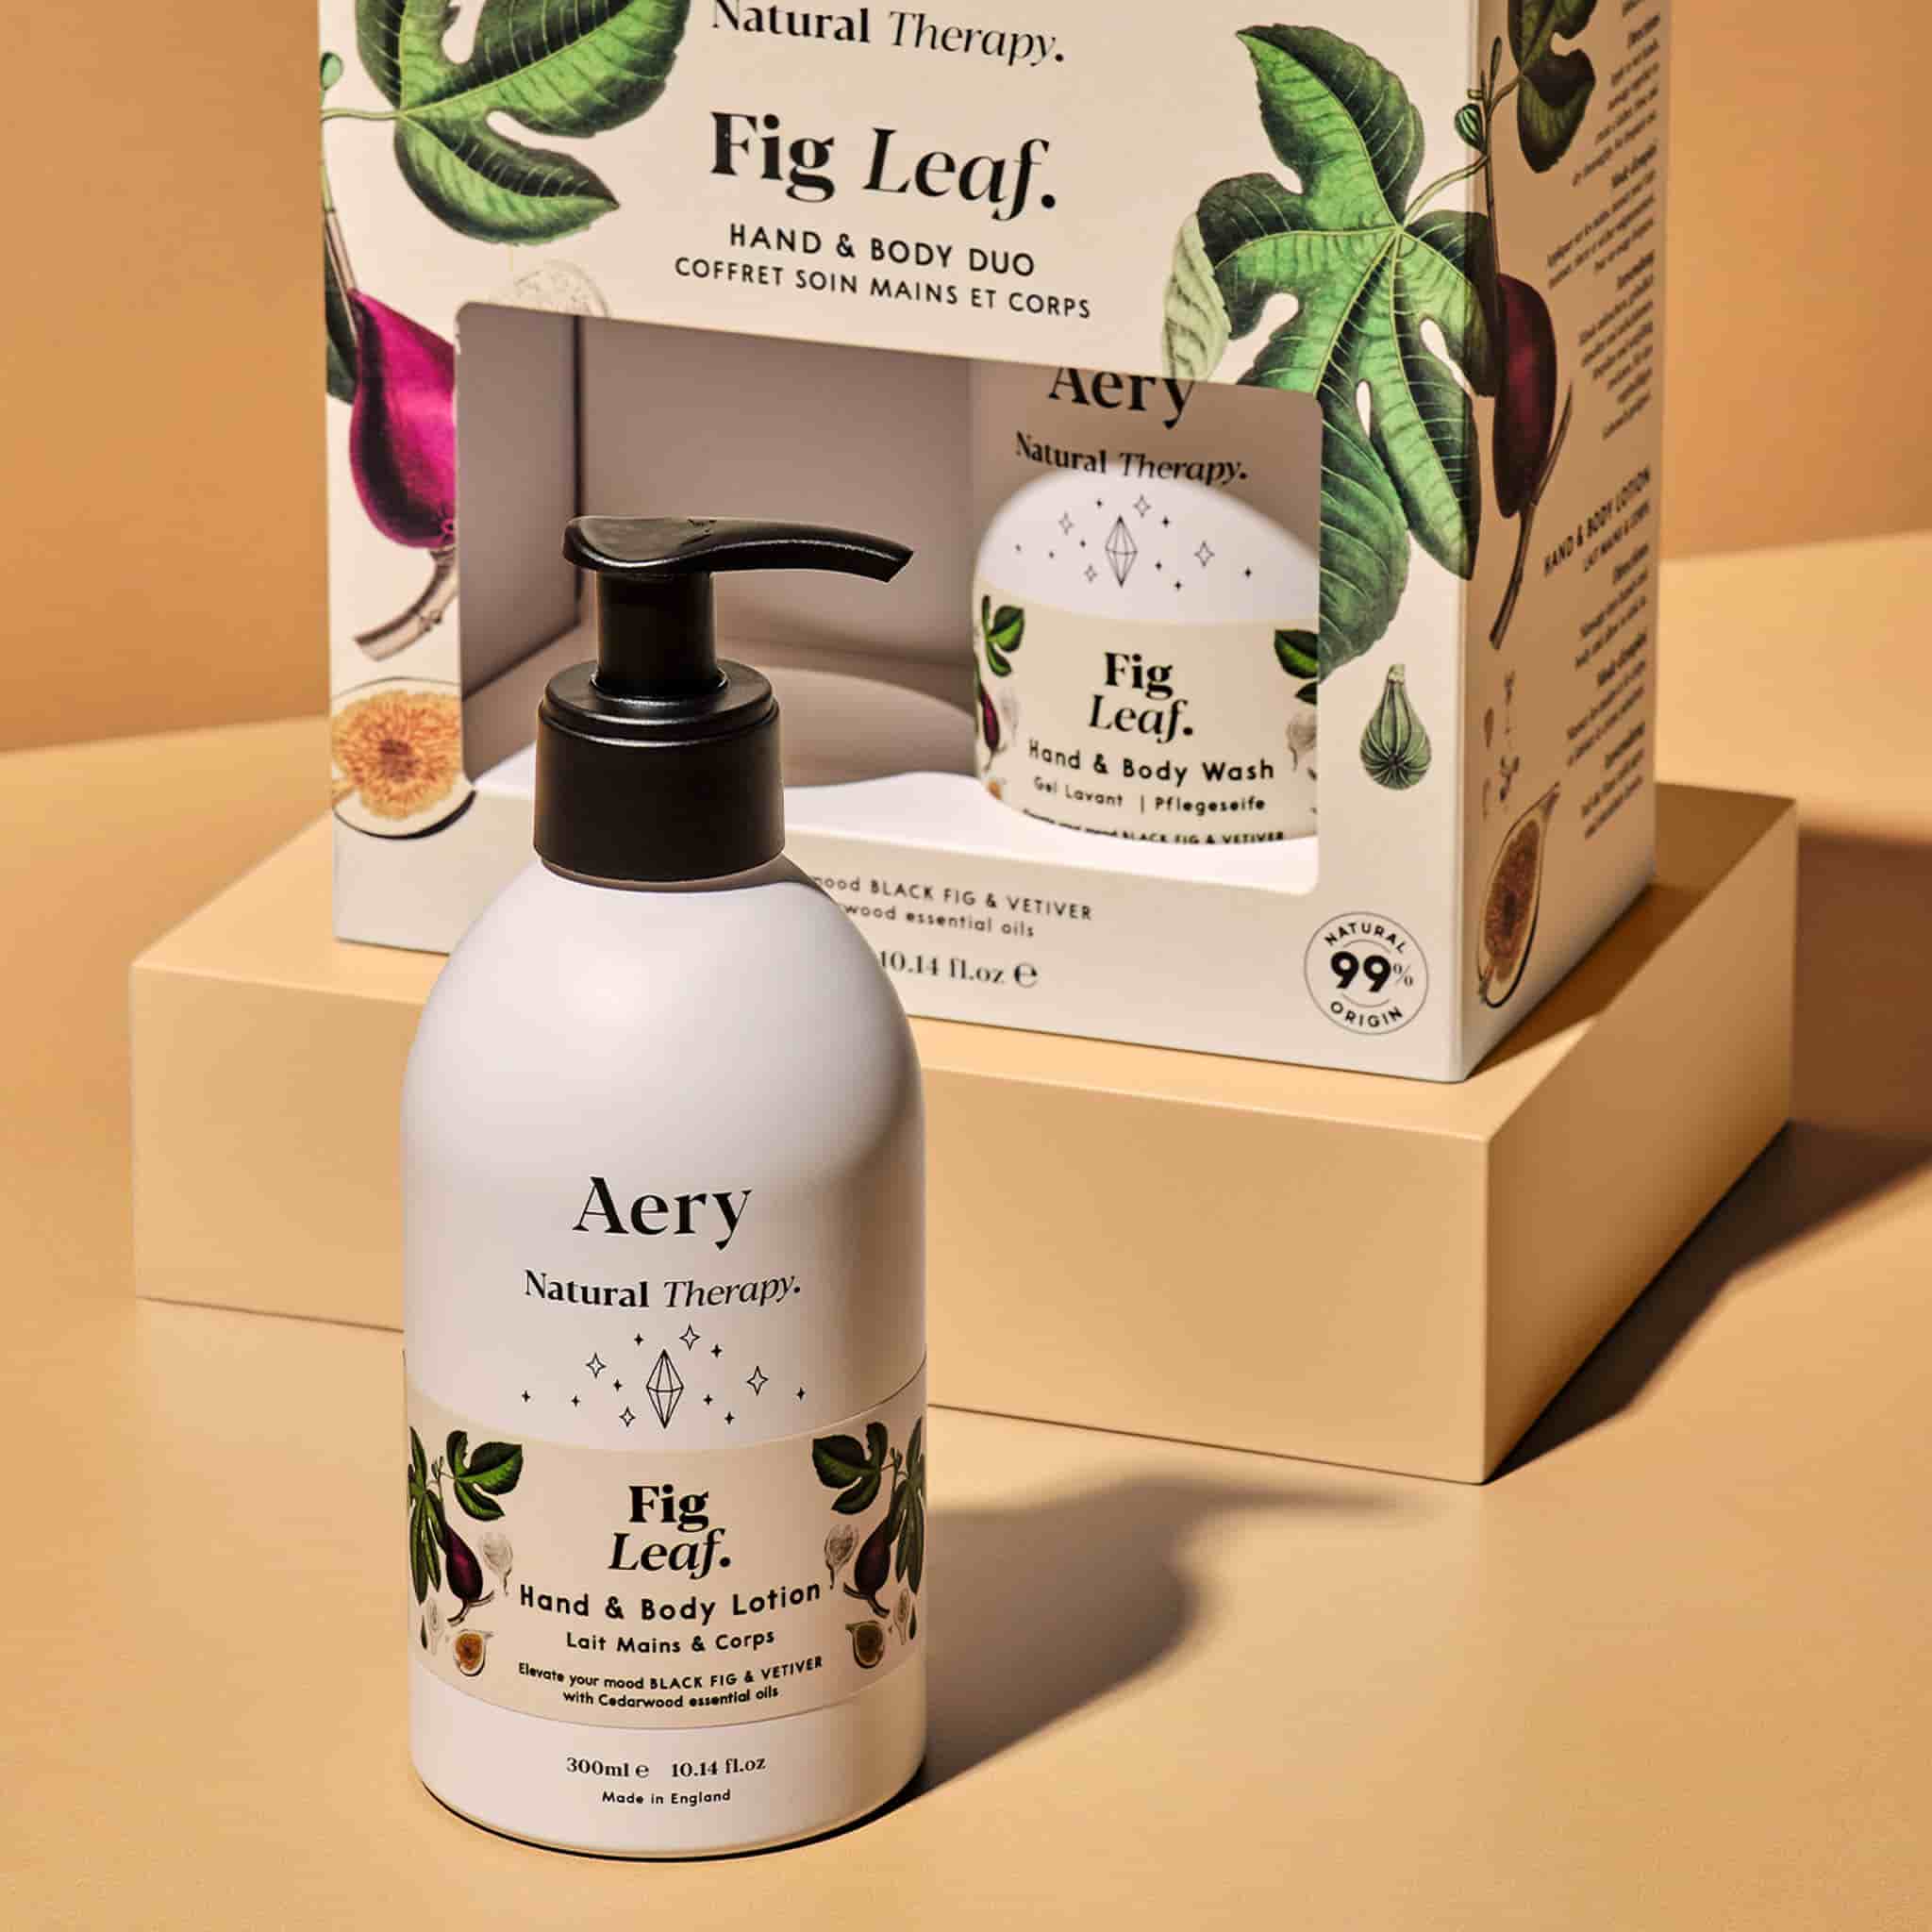 Aery Fig Leaf Hand & Body Duo Gift Set